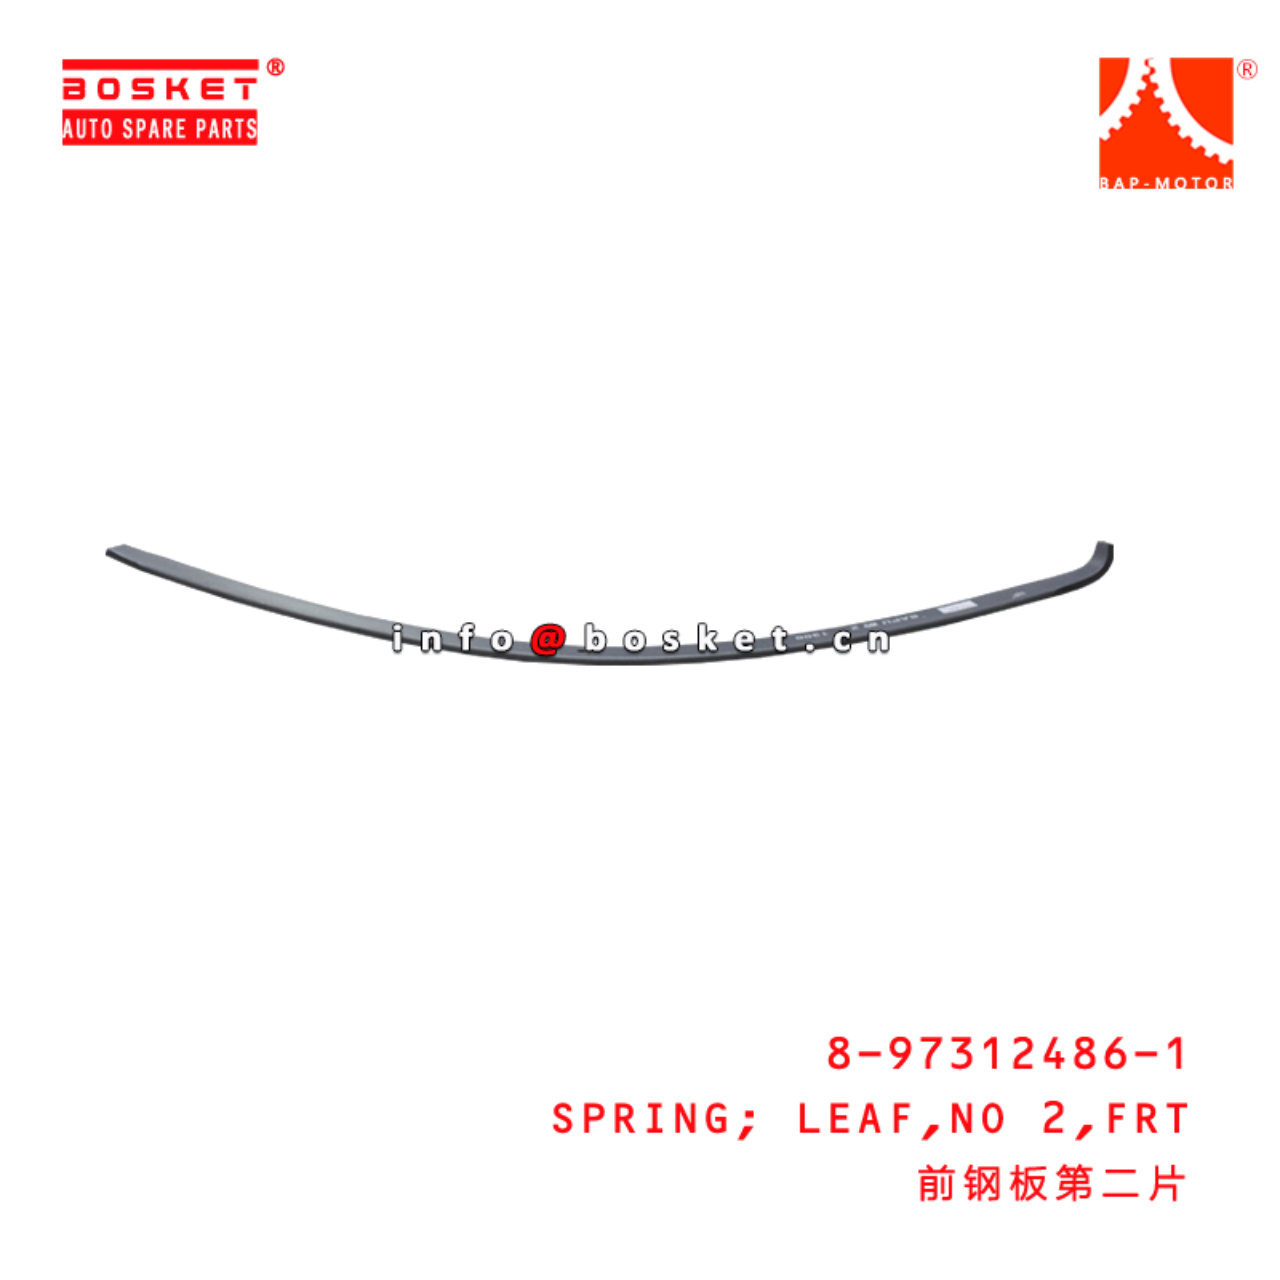 8-97312486-1 Rear Main No 2 Leaf Spring 8973124861 Suitable for ISUZU NQR